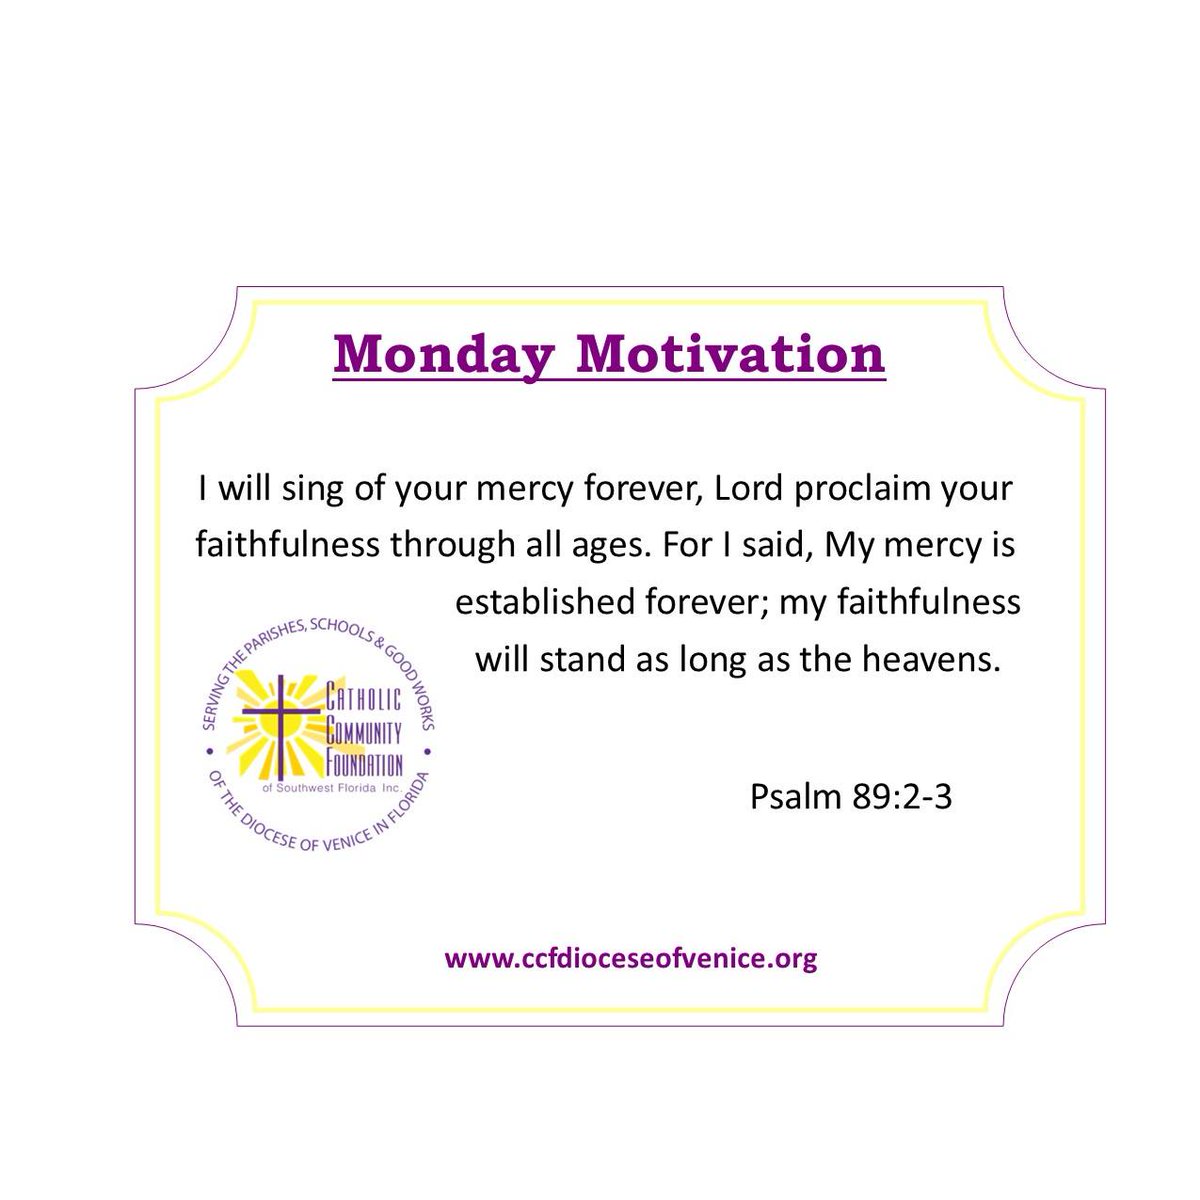 #monday #motivation #verseoftheday #faith #love #venicefl #swfl #psalms #catholiccommunity #community #catholicchurch #CCF